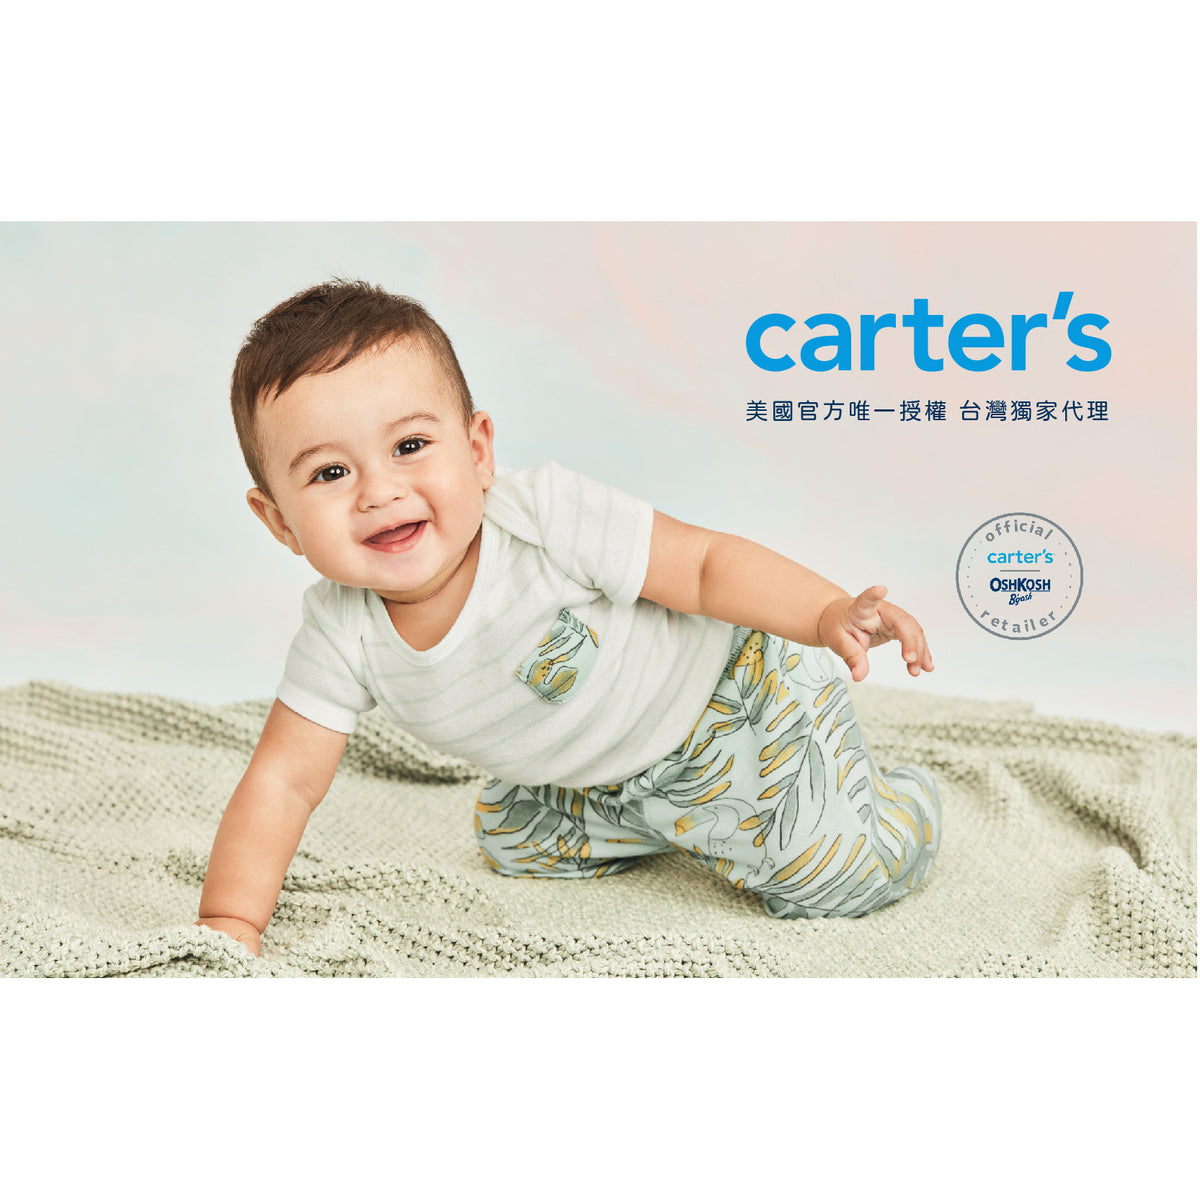 Carter's 紅白條紋連身裝(6M-24M)